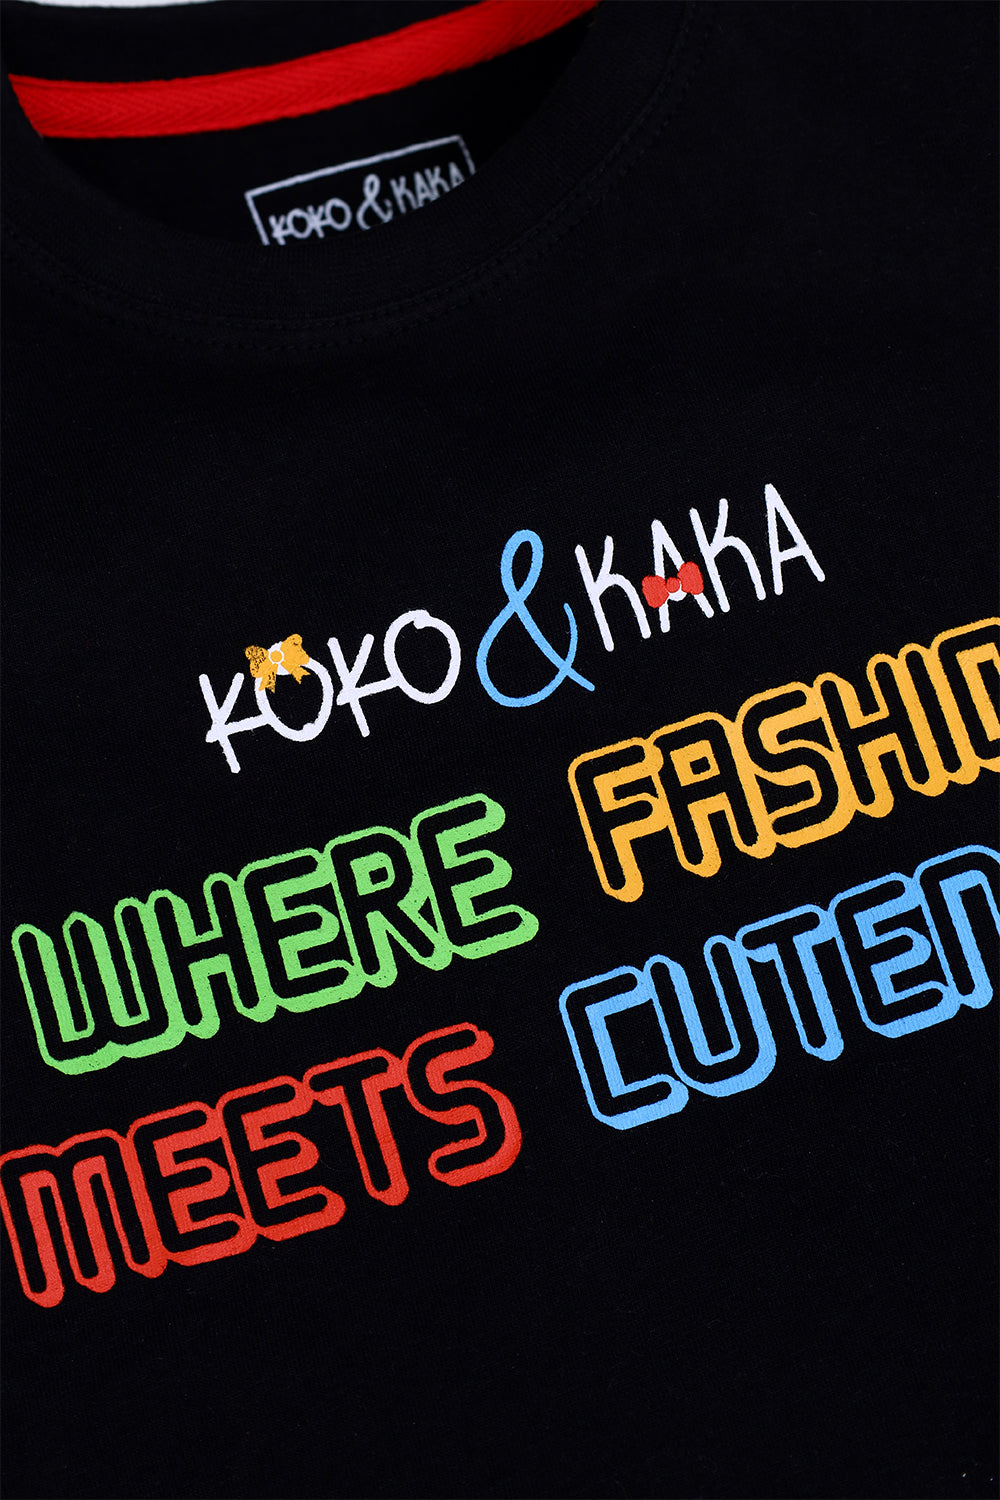 KOKO and KAKA branded graphic T-shirt 100% cotton jersey fabric